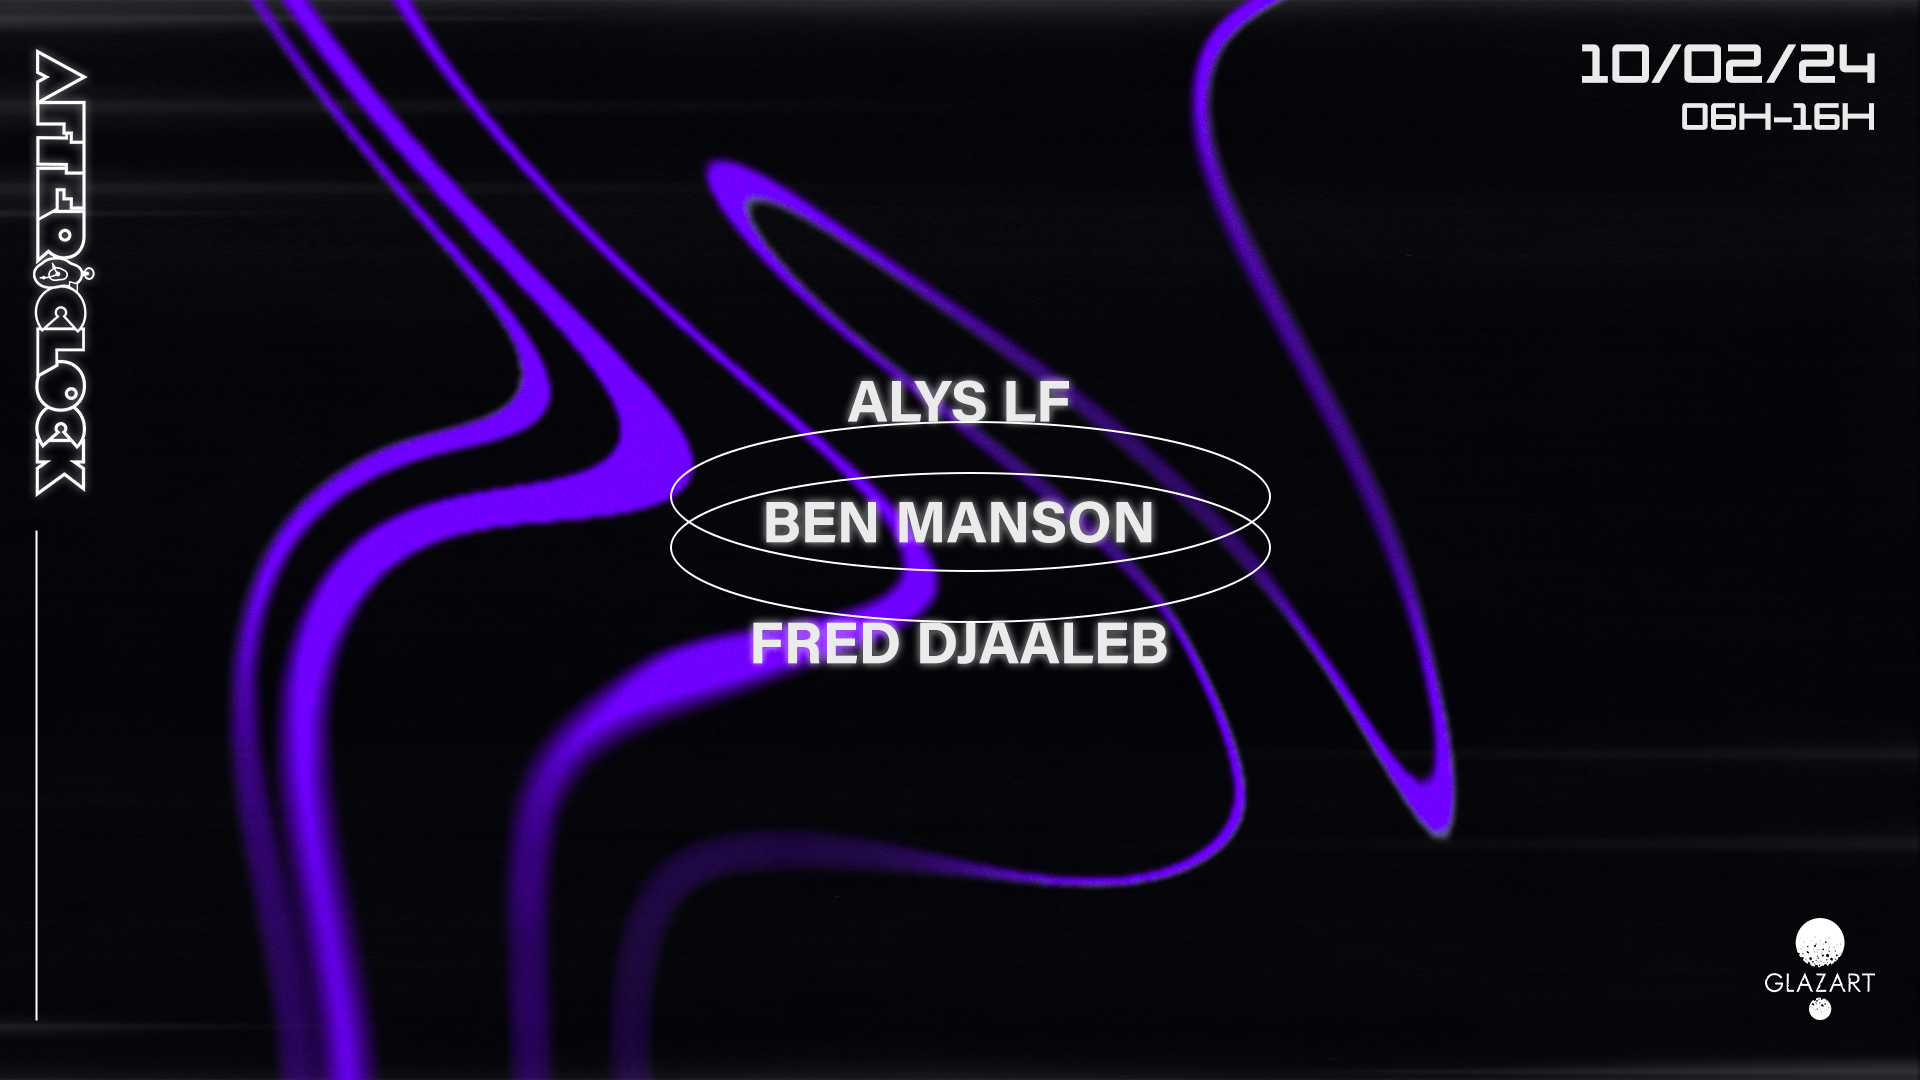 After O'Clock: Ben Manson, Alys LF & Fred Djaaleb - フライヤー表